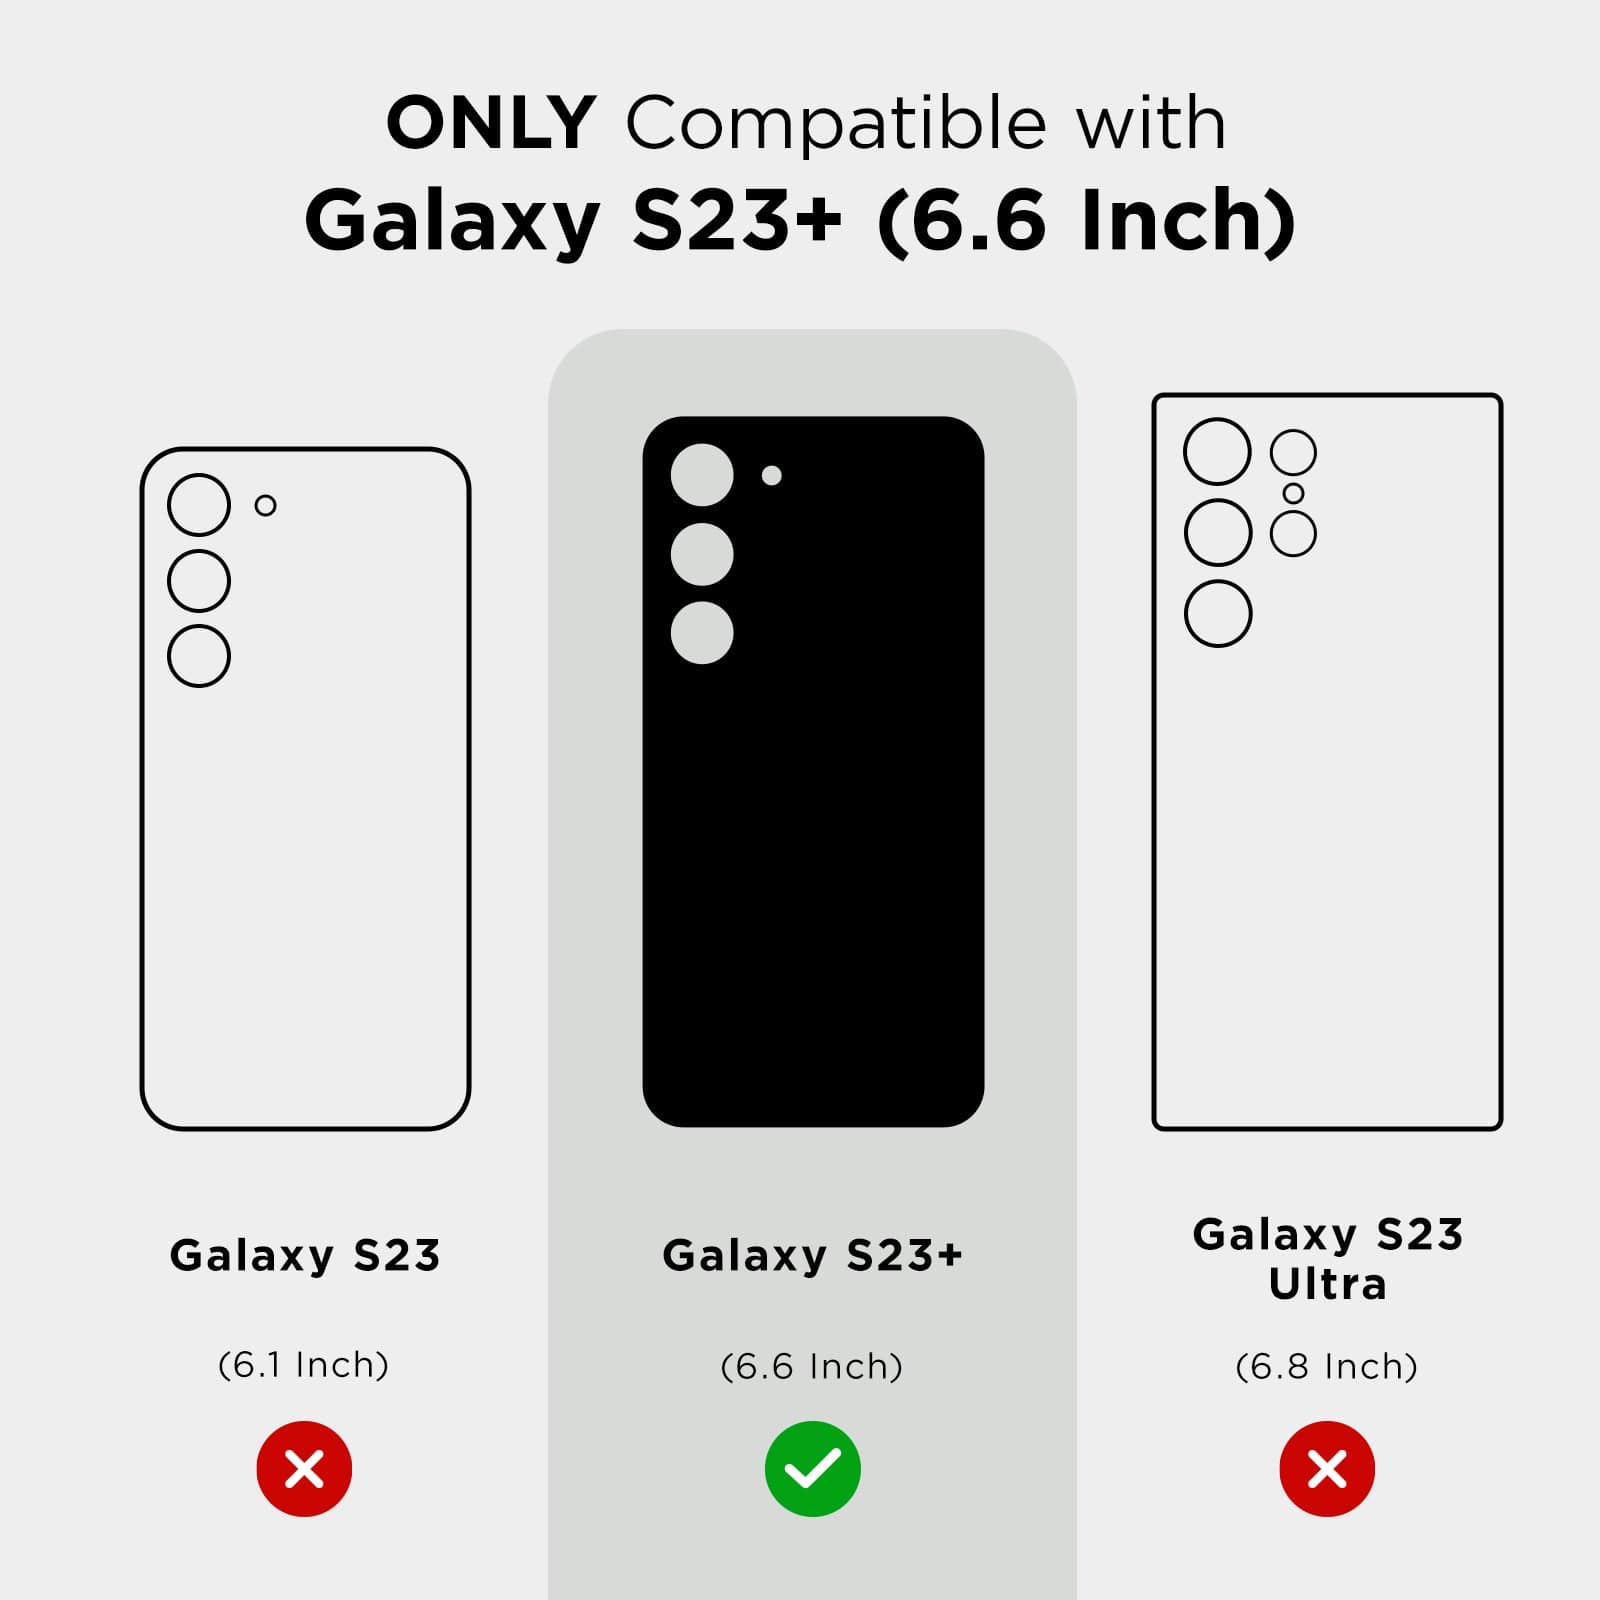 Buy Galaxy S23, S23+